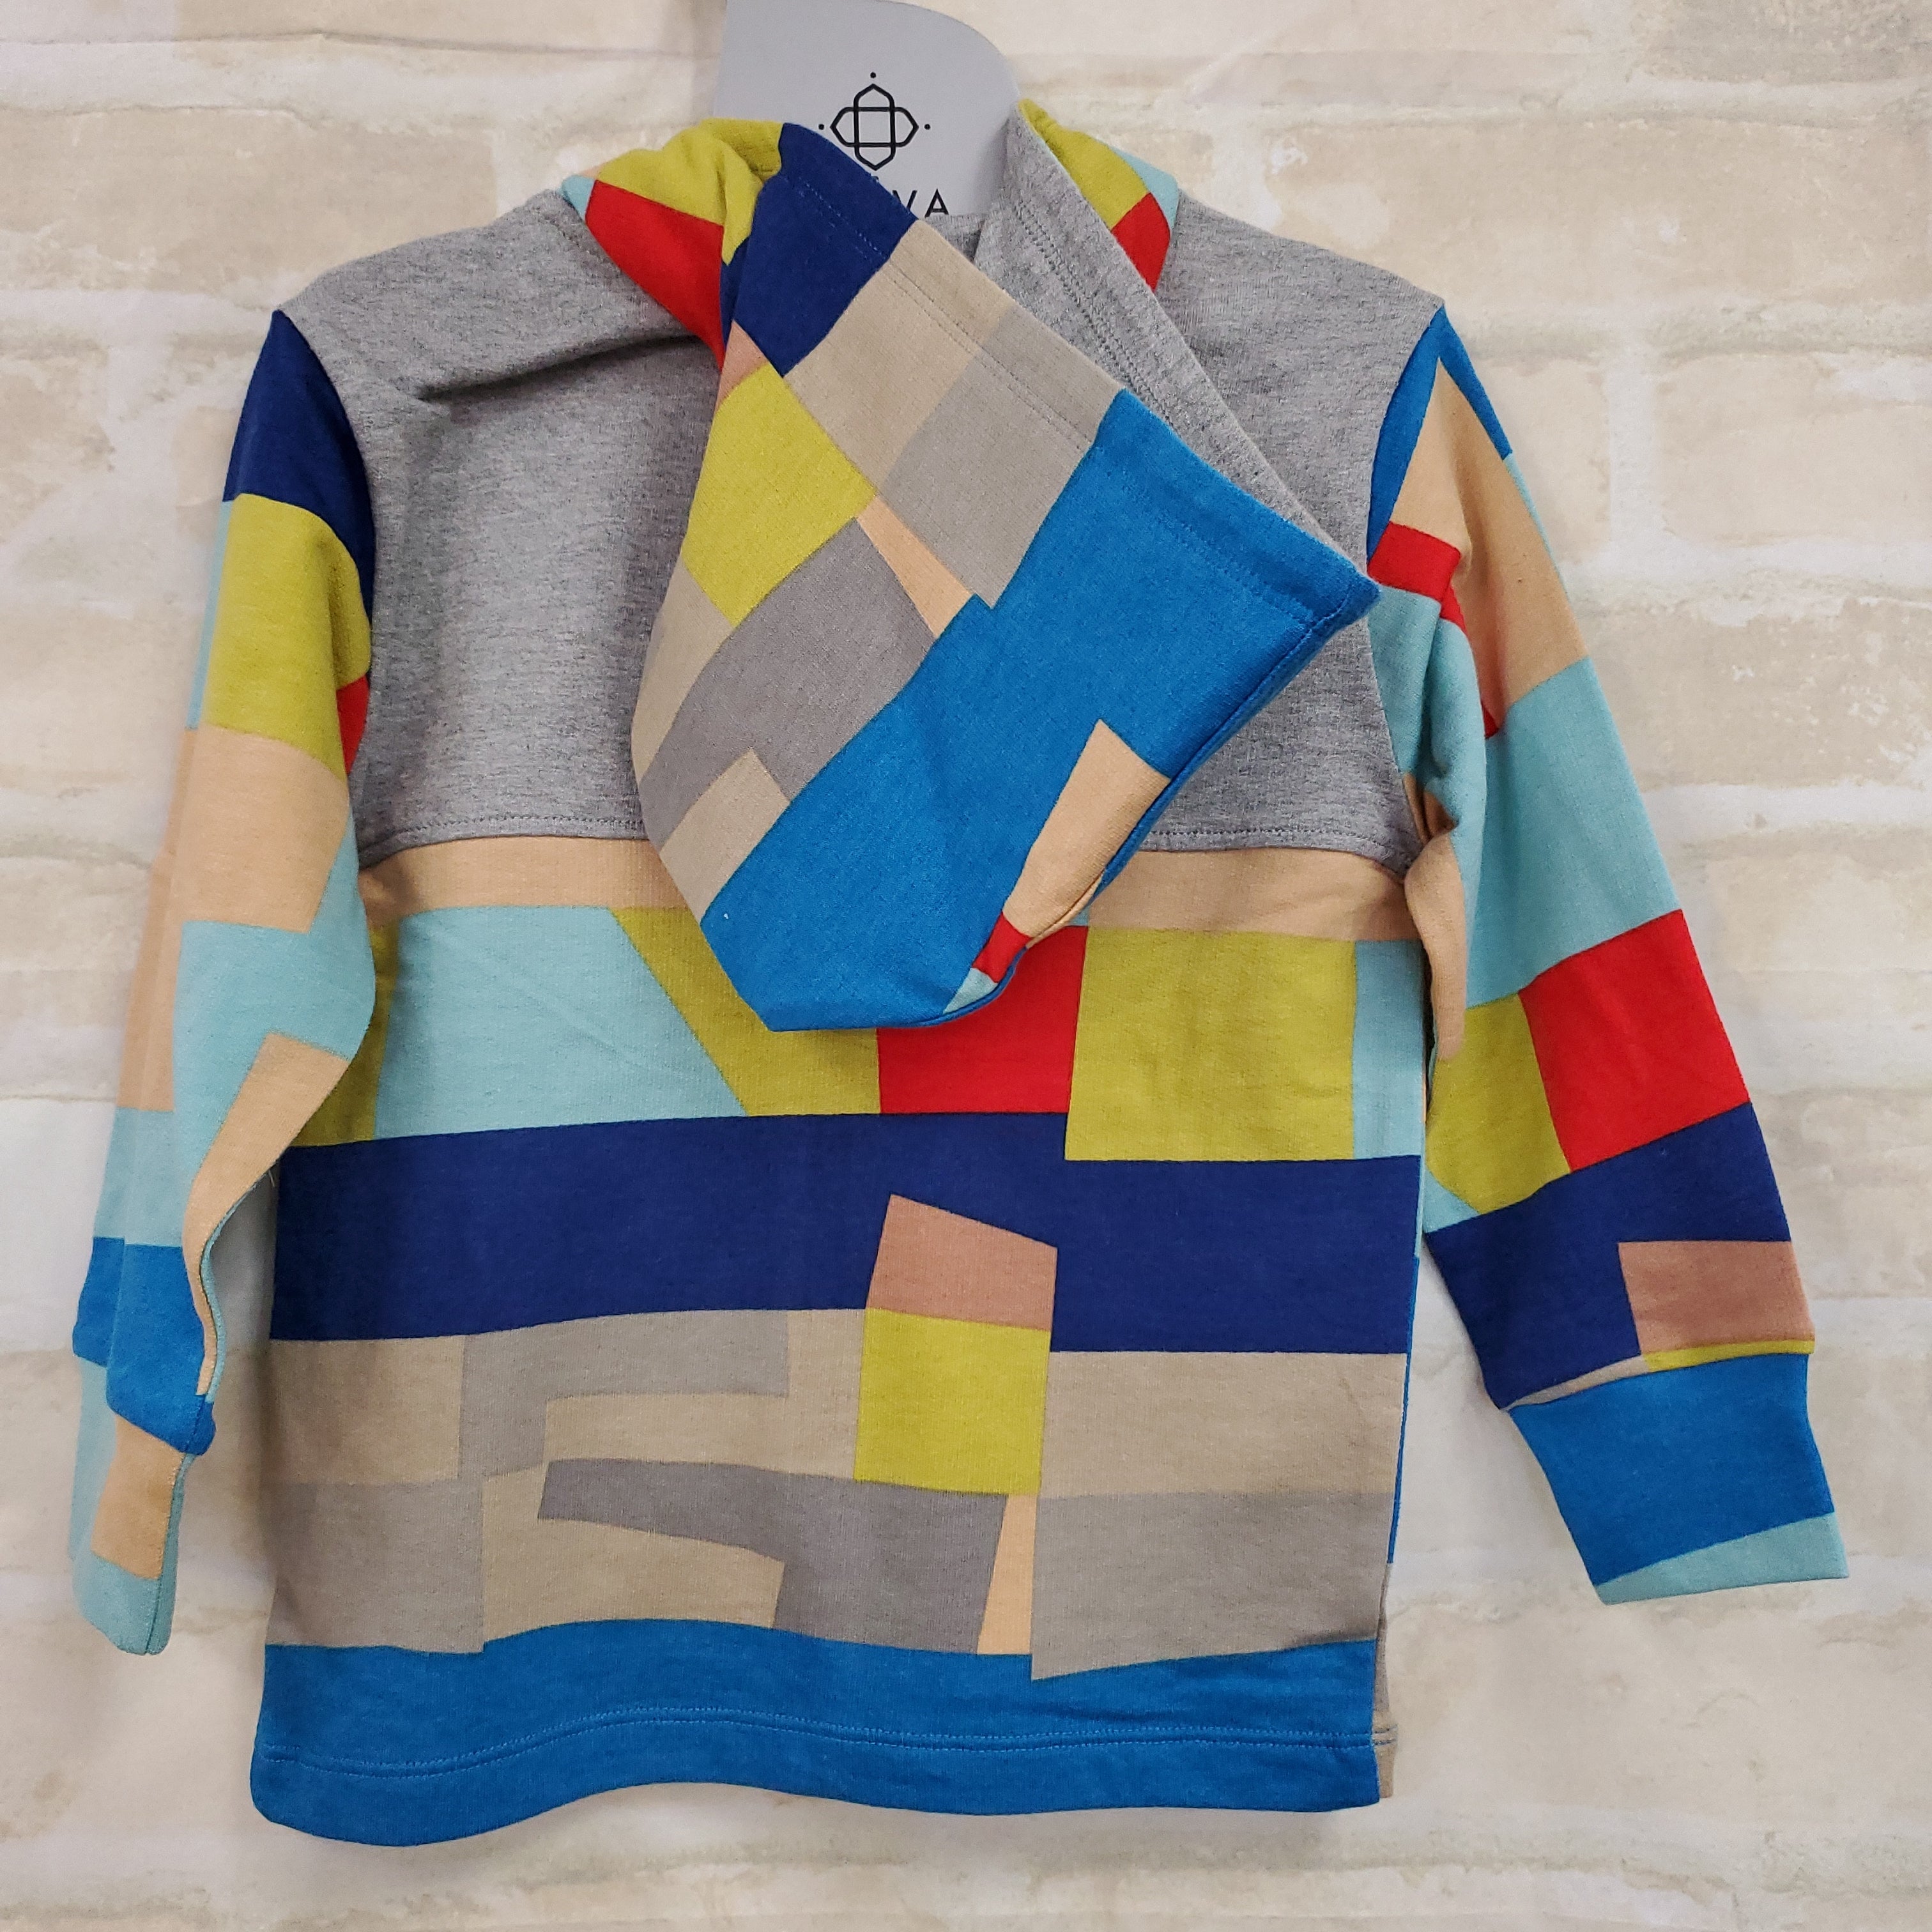 Satva New boy/girl jacket multi color organic cotton hooded zips 3T